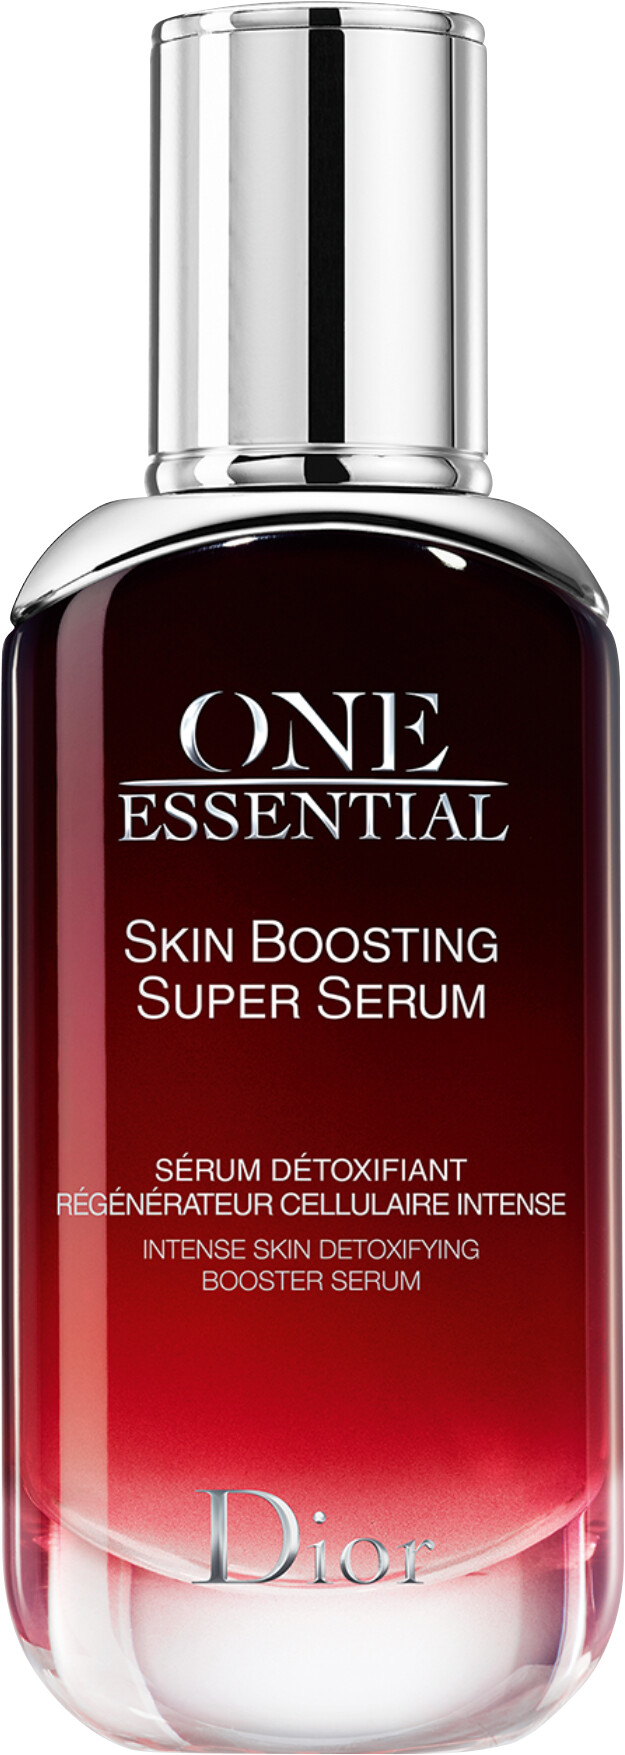 dior one essential skin boosting serum